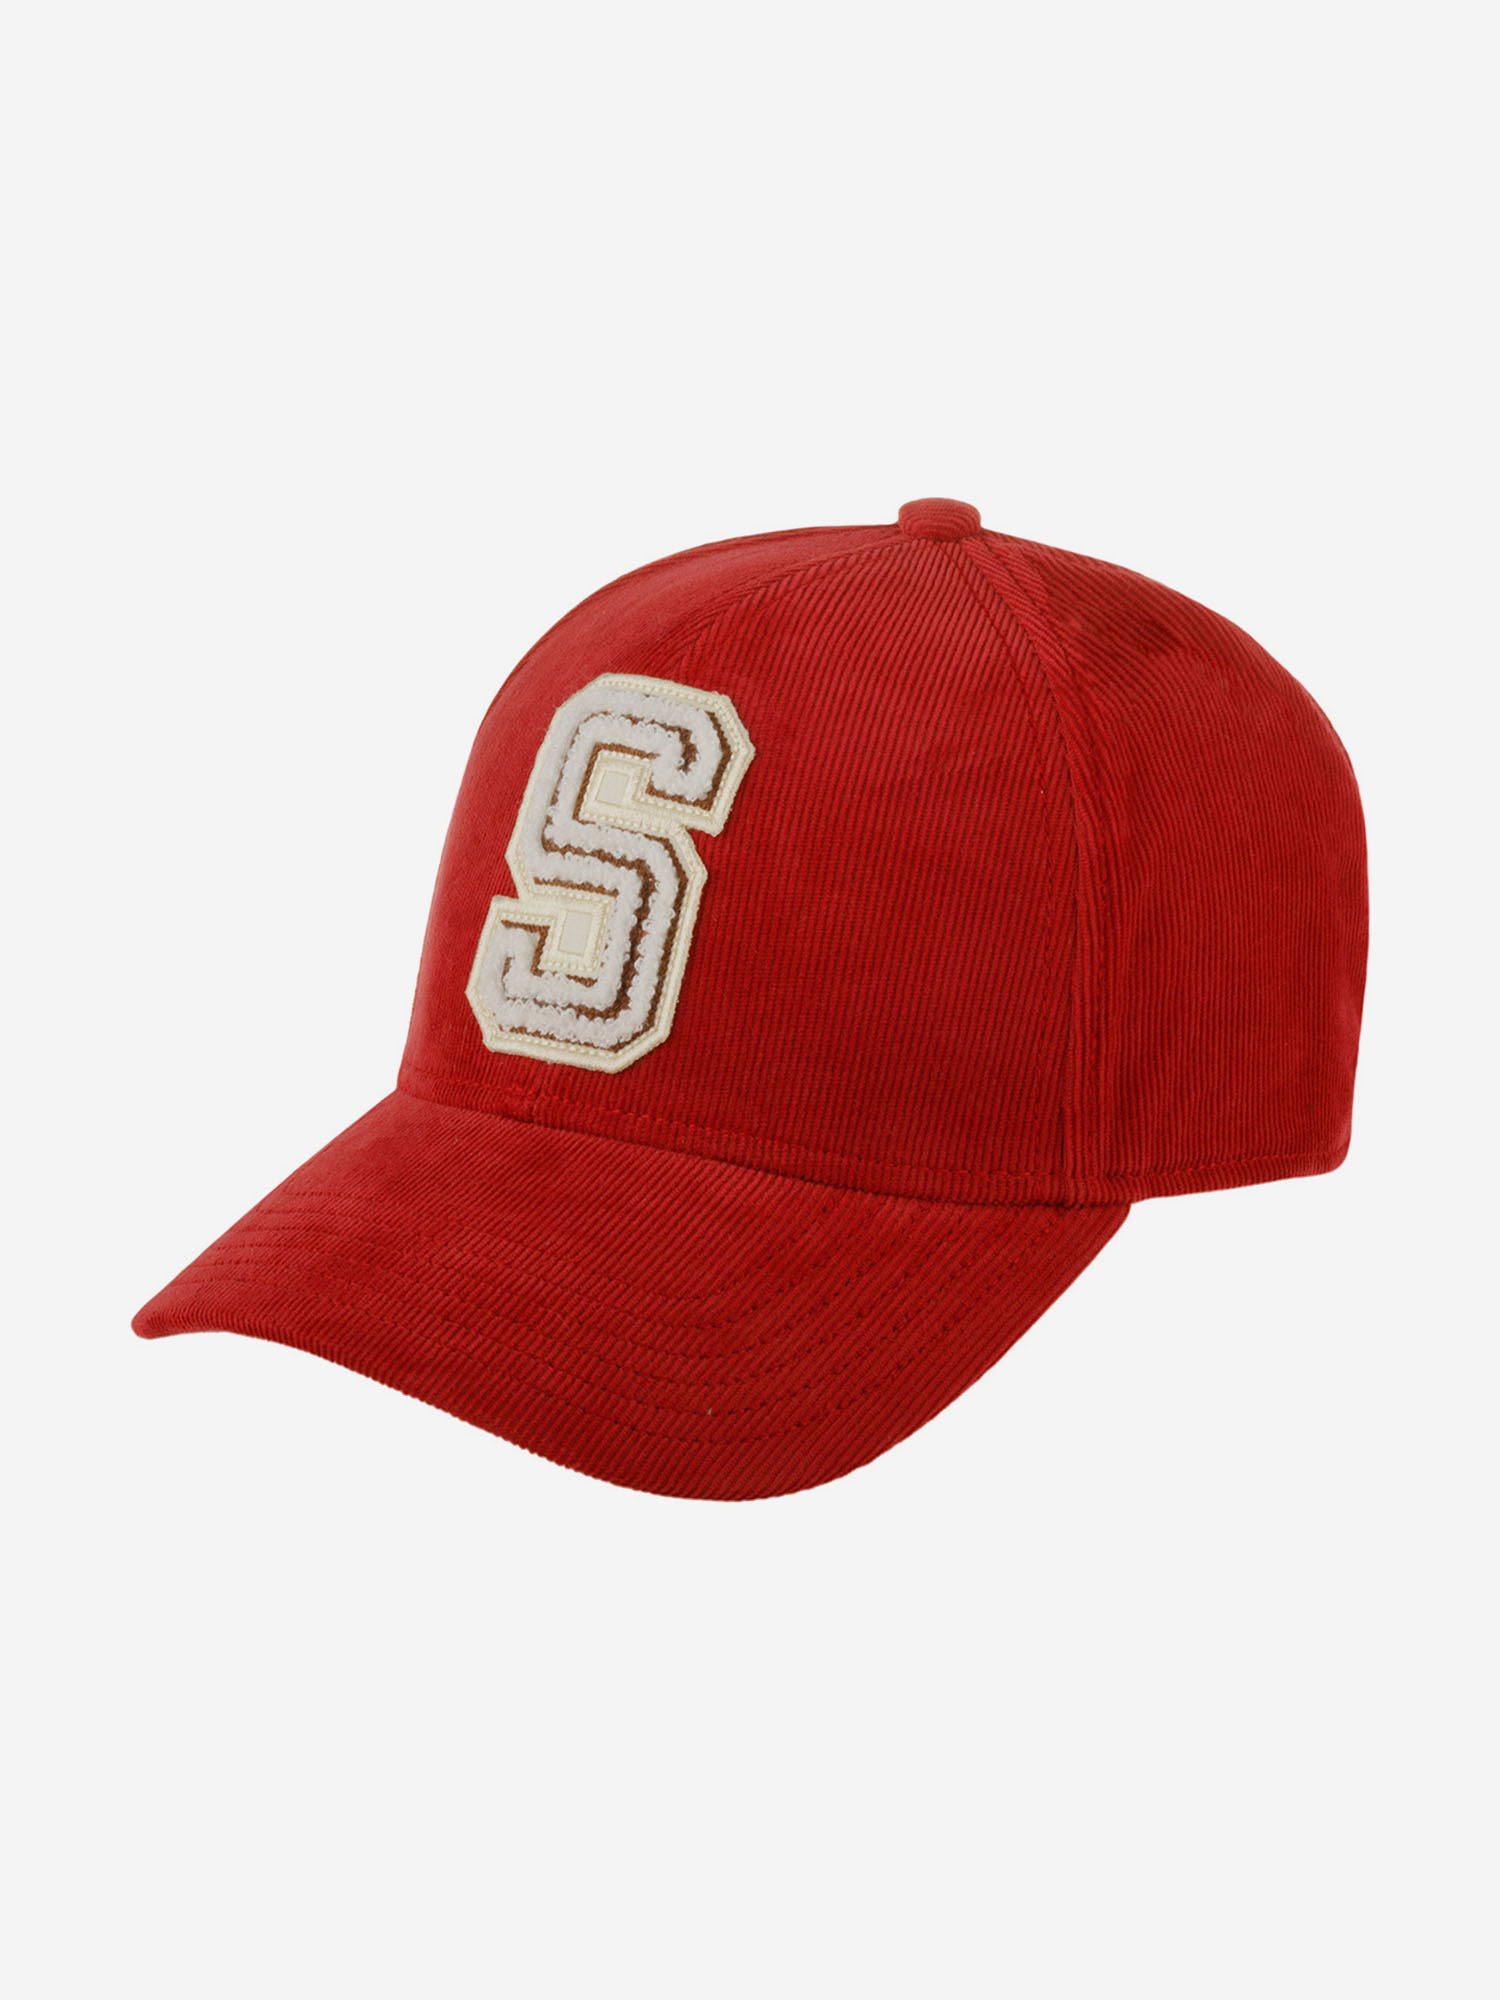 Бейсболка STETSON 7721147 BASEBALL CAP SUSTAINABLE CORDUROY (красный), Красный